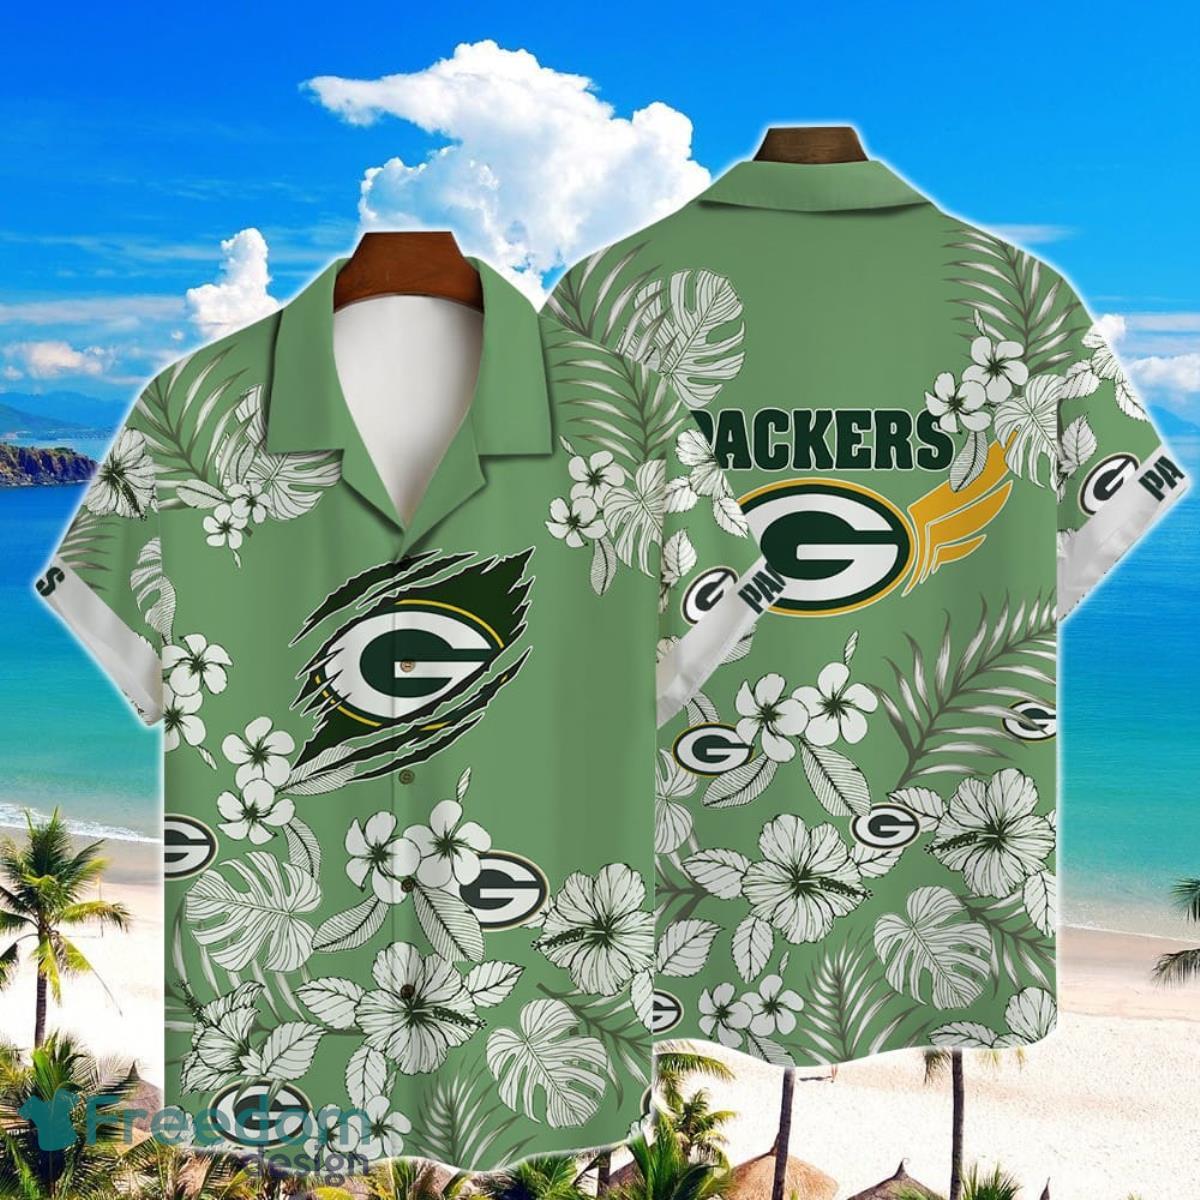 Houston Astros Green Leaf Pattern Tropical Hawaiian Shirt For Men And Women  - Freedomdesign